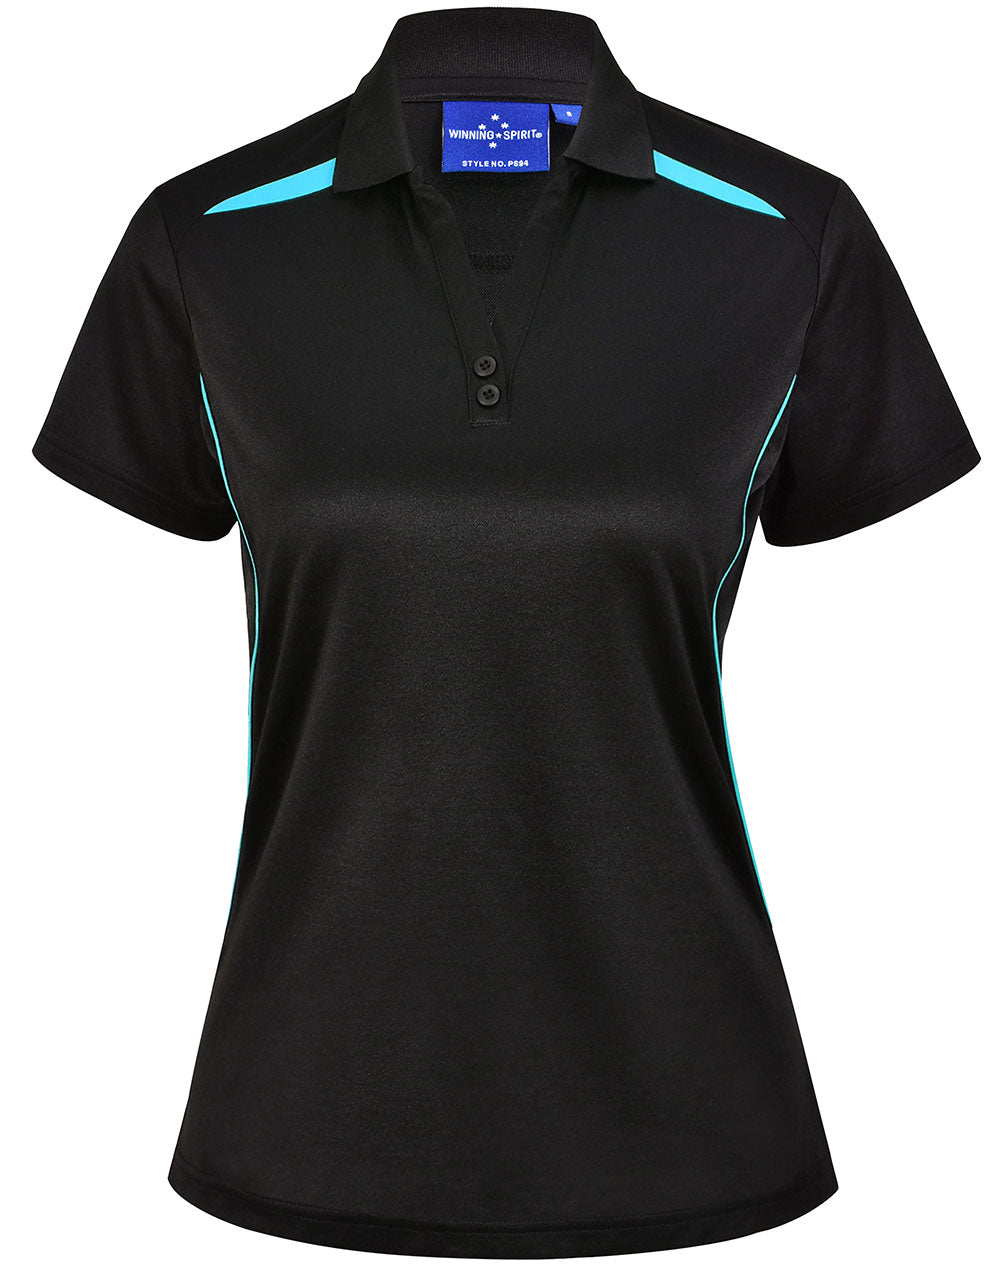 Winning Spirit Women's Sustainable Poly-Cotton Contrast Polo PS94 Casual Wear Winning Spirit Black/Aqua 8 